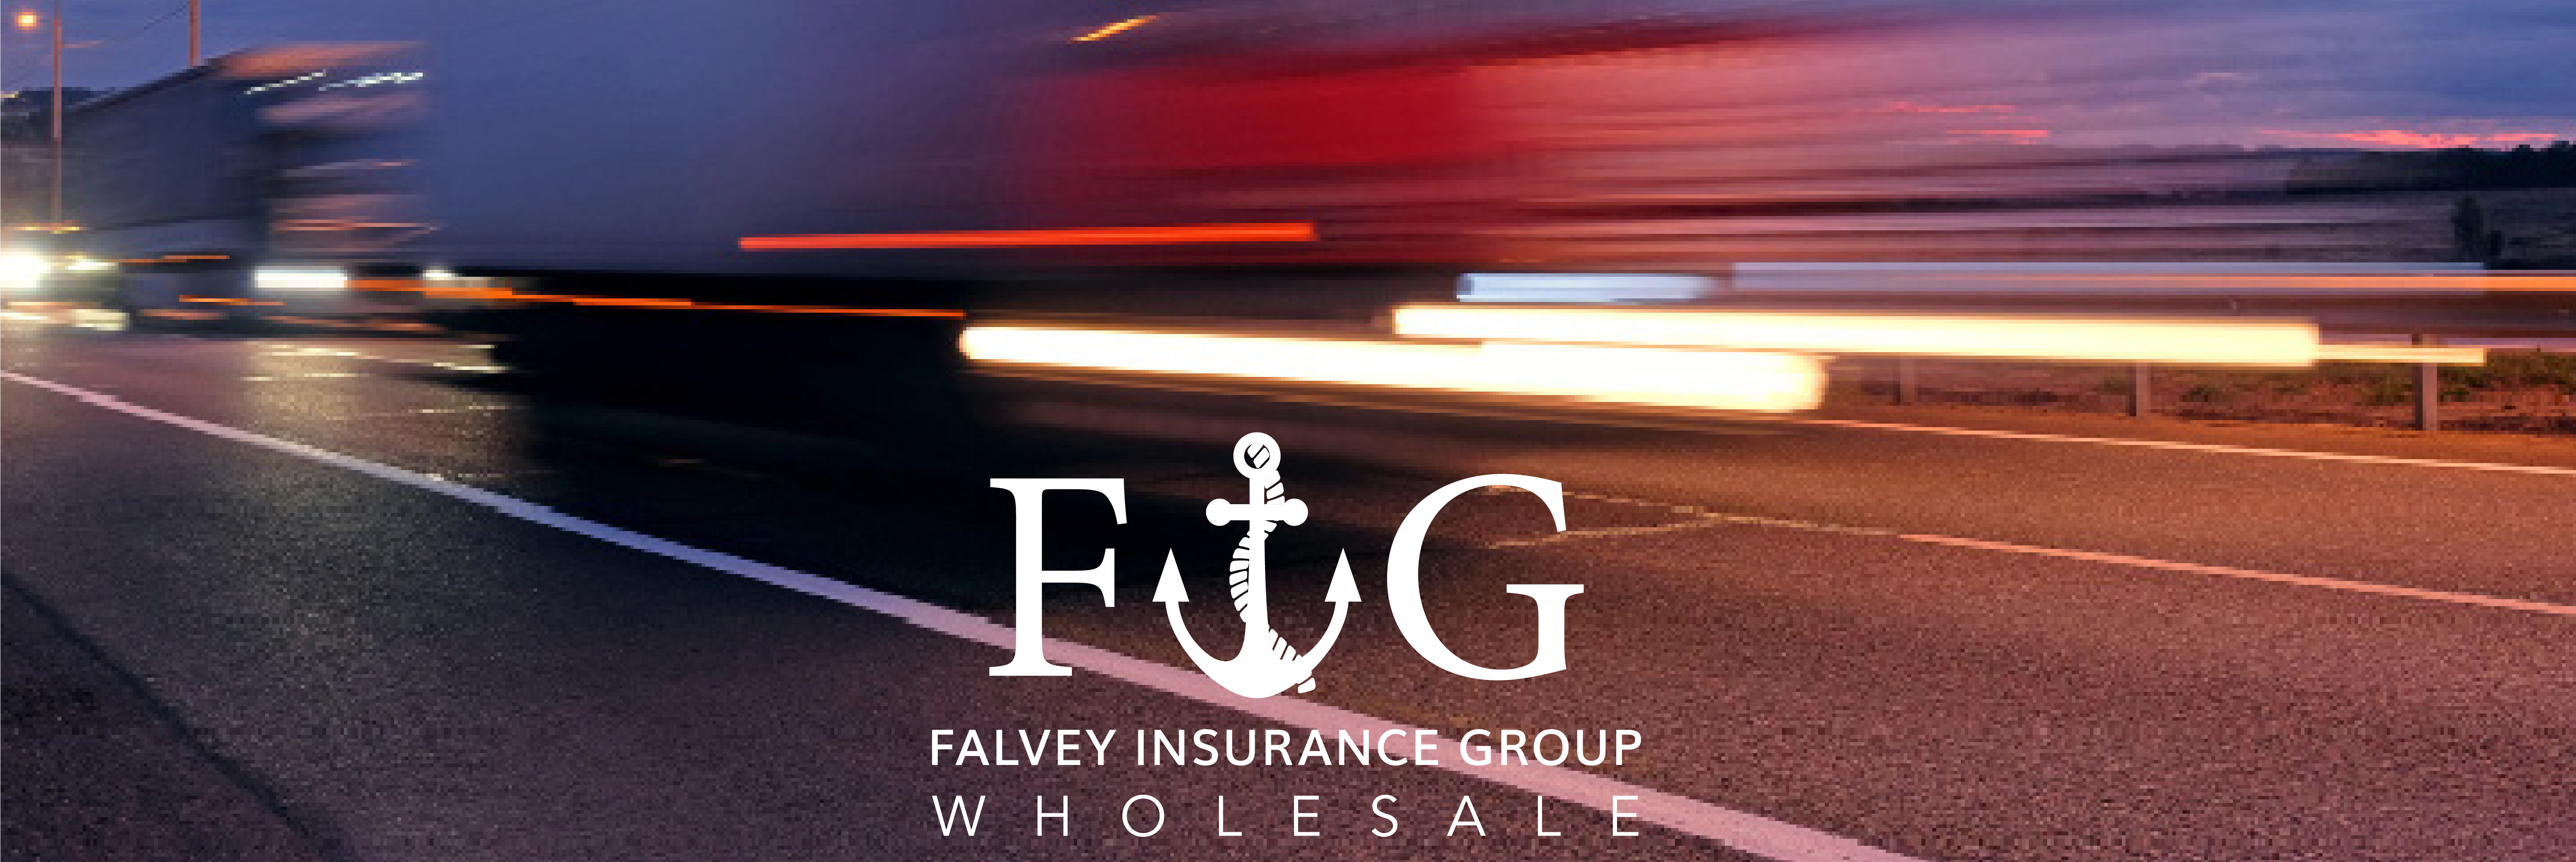 falvey insurance group wholesale banner